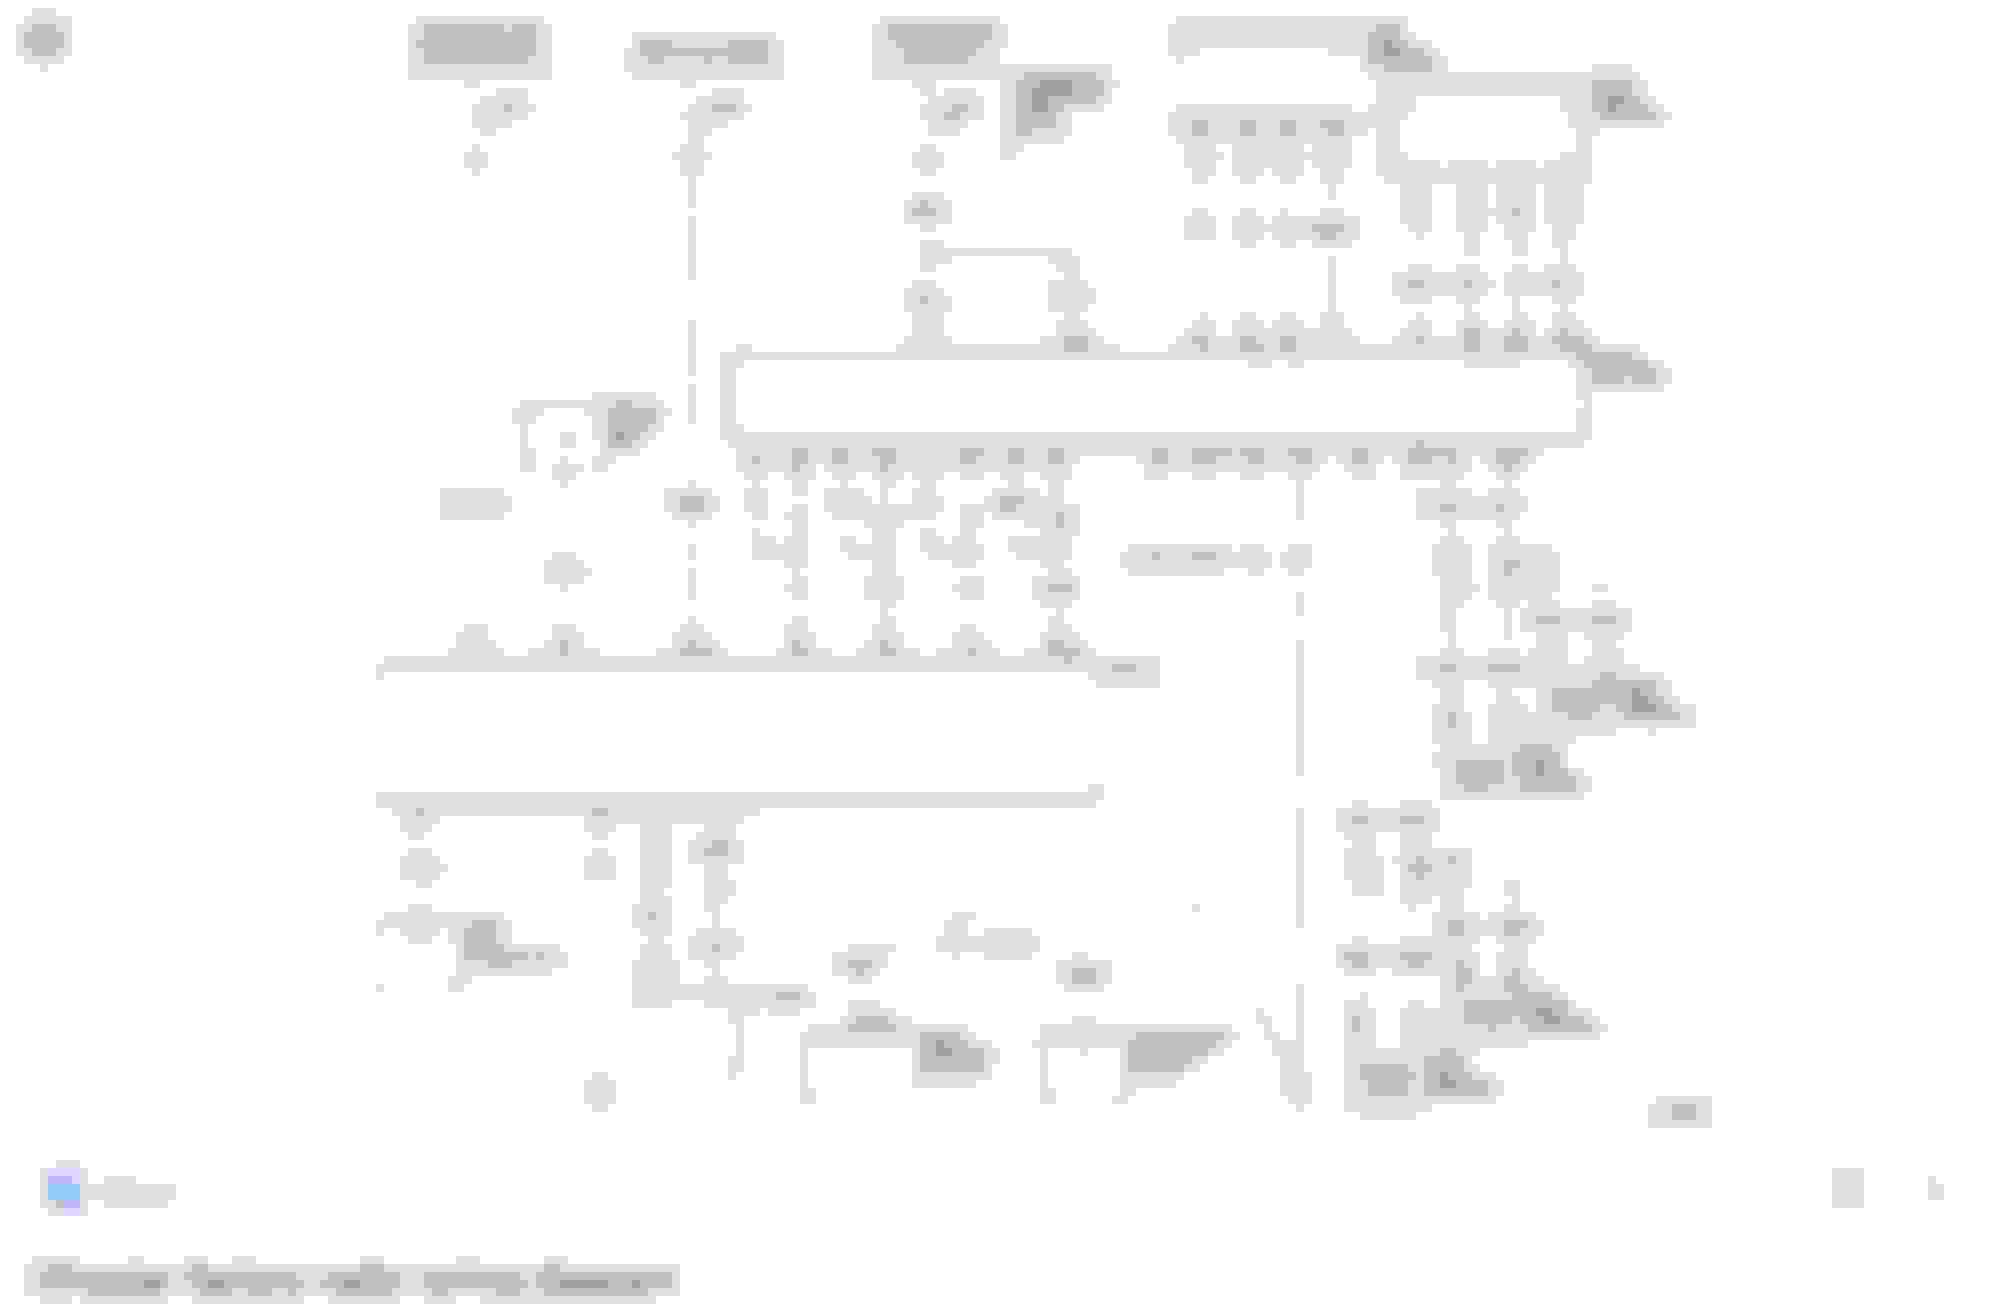 Chrysler Crossfire Engine Diagram - Wiring Diagram